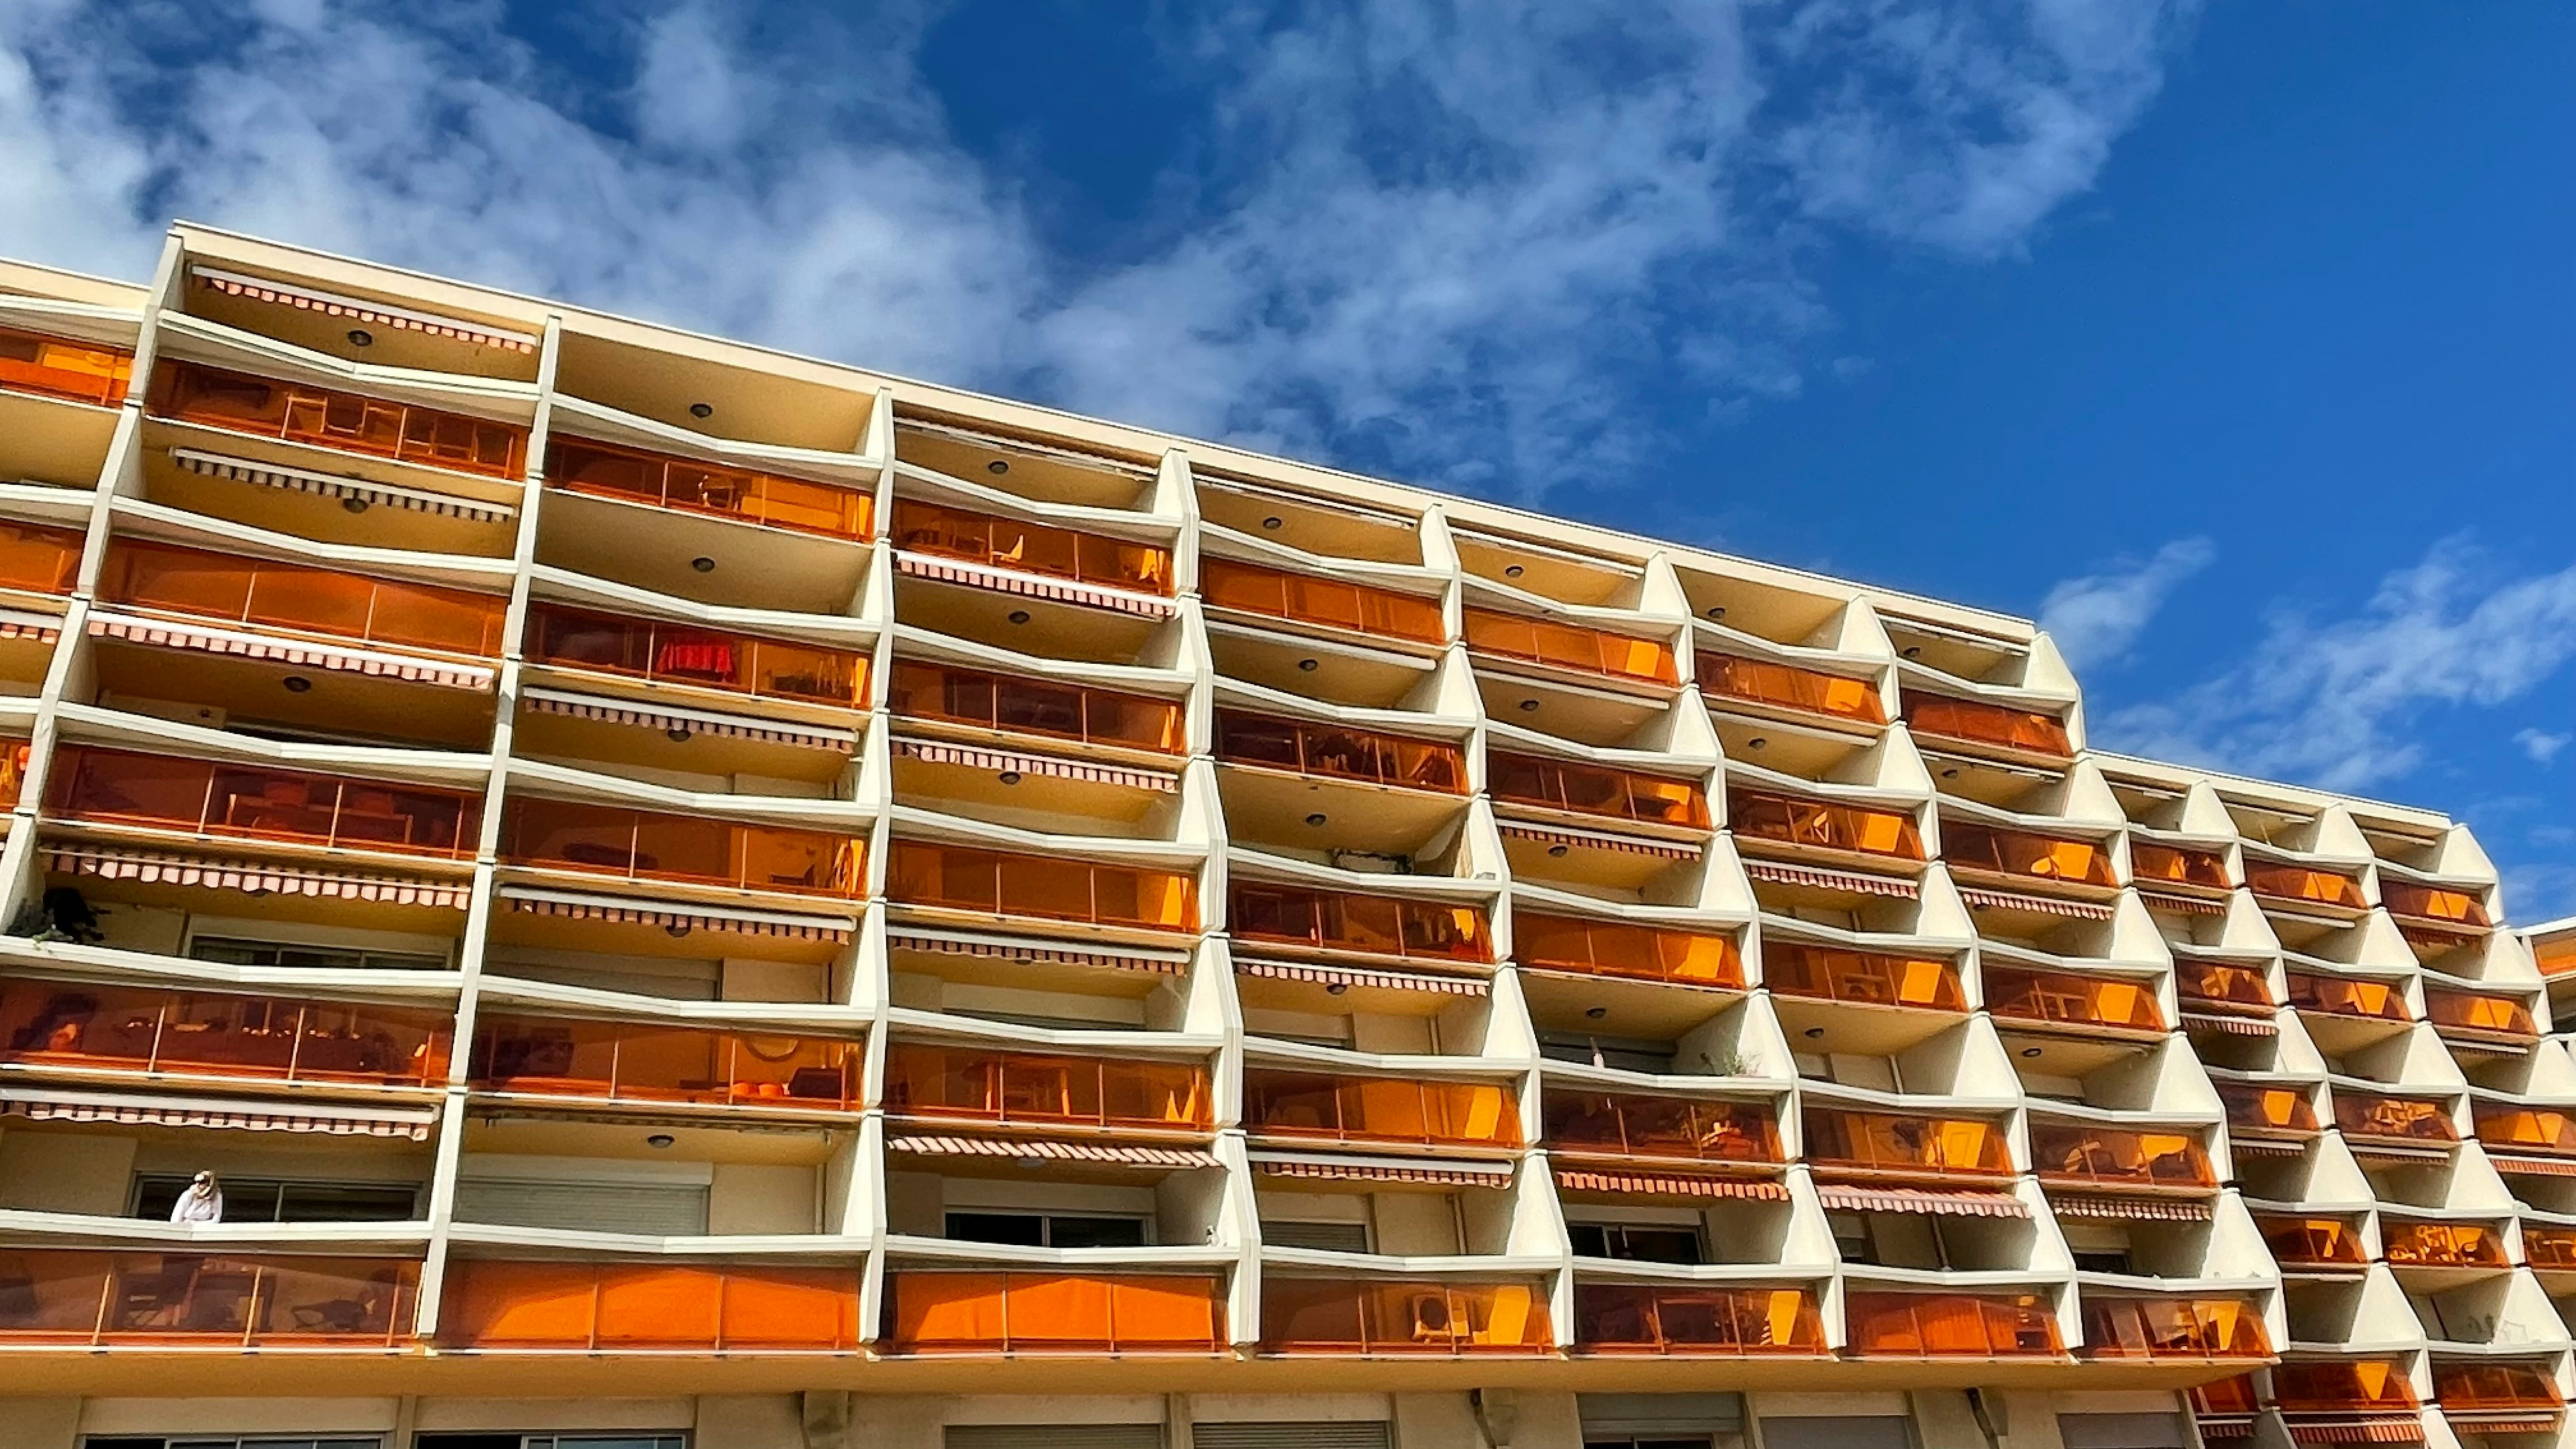 Palavas les flots - Orange building / blue sky